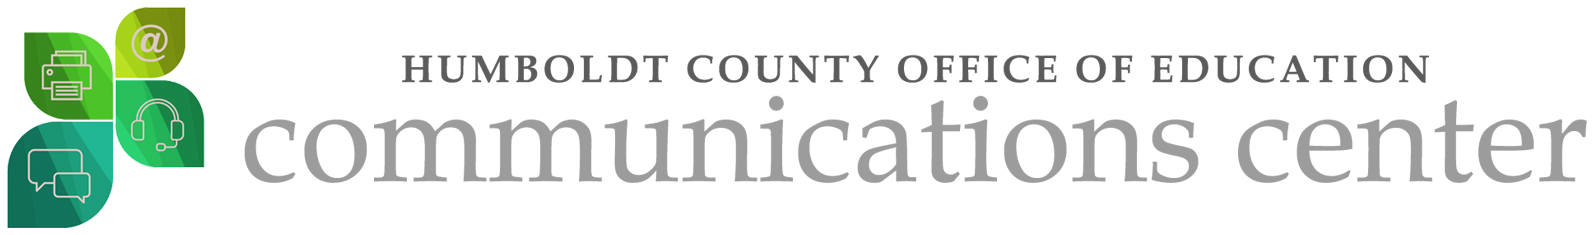 Communications Center Logo